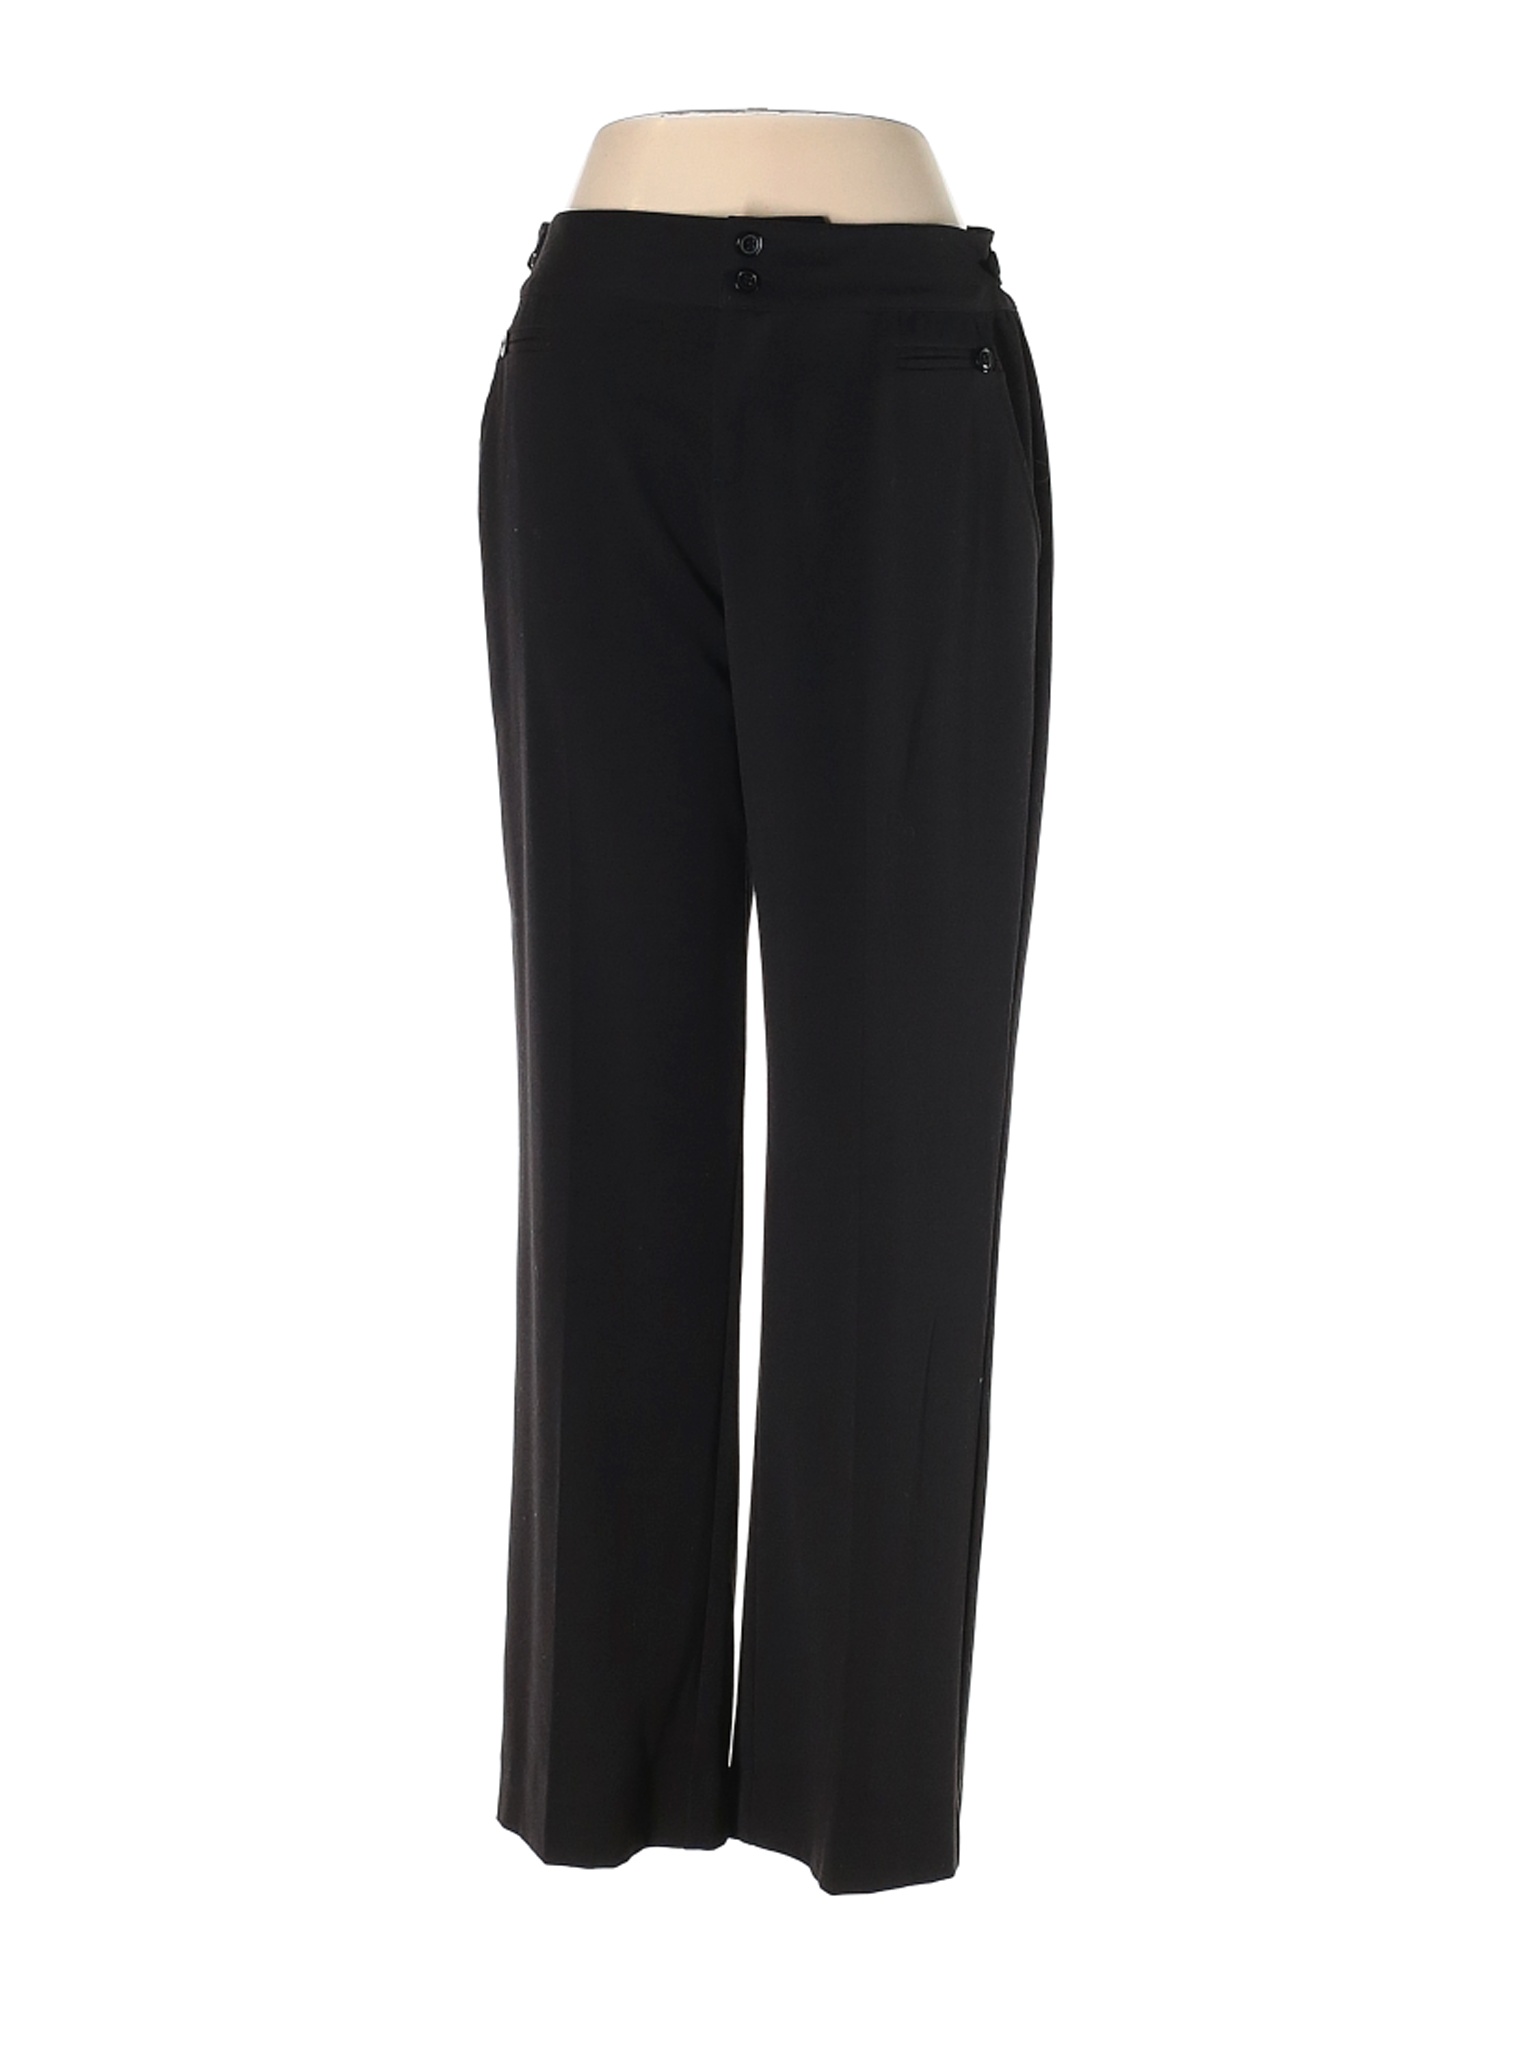 Christopher & Banks Women Black Dress Pants 4 | eBay